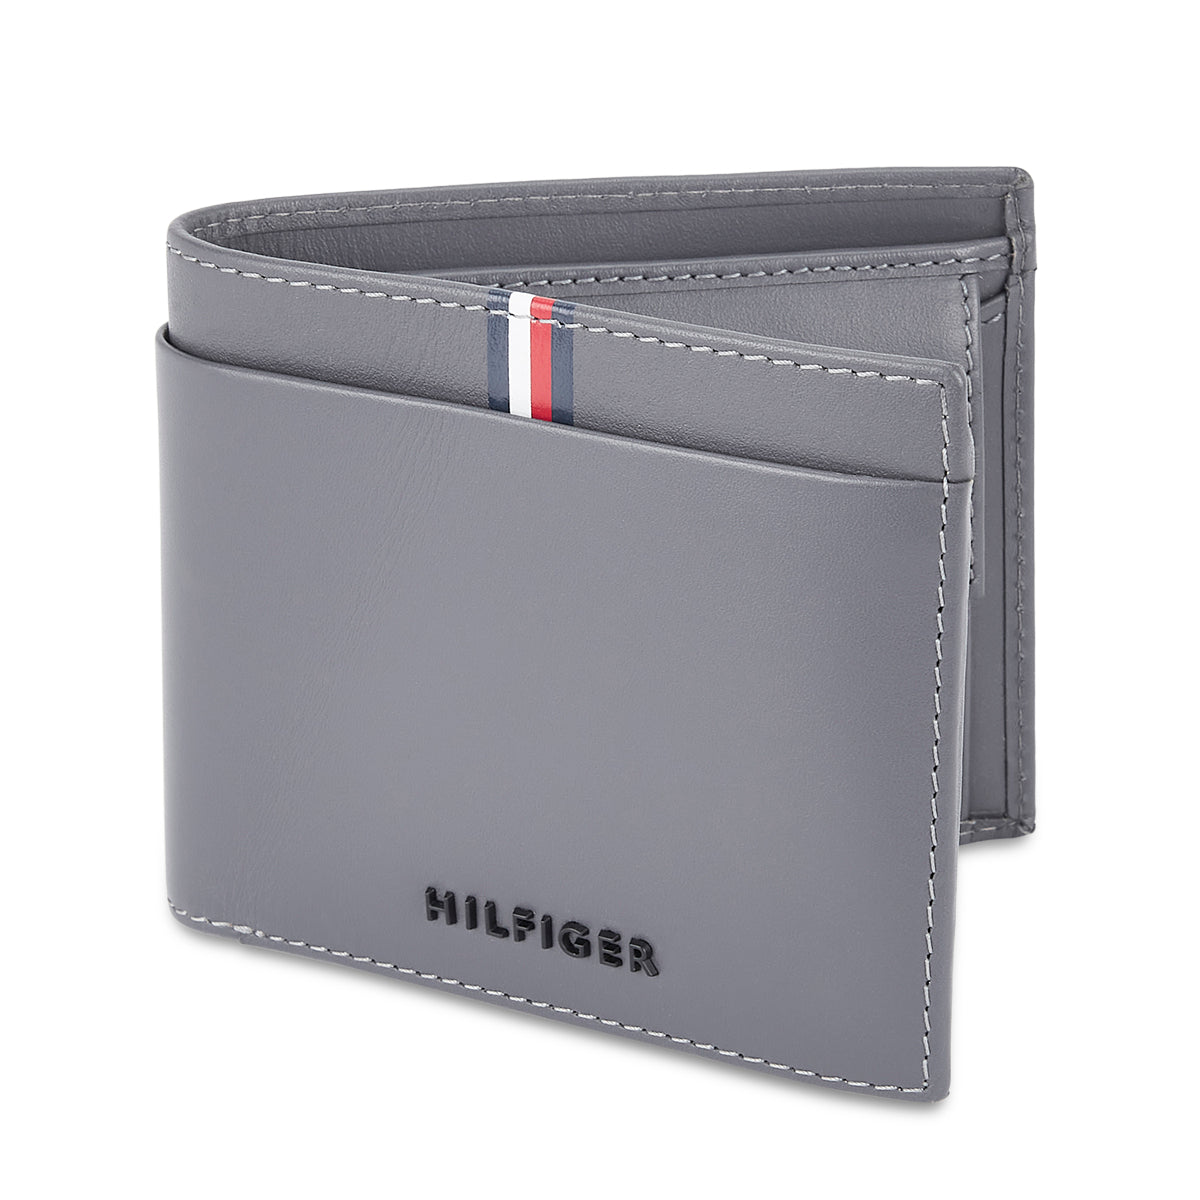 Tommy Hilfiger Drammen Men's Leather Wallet grey